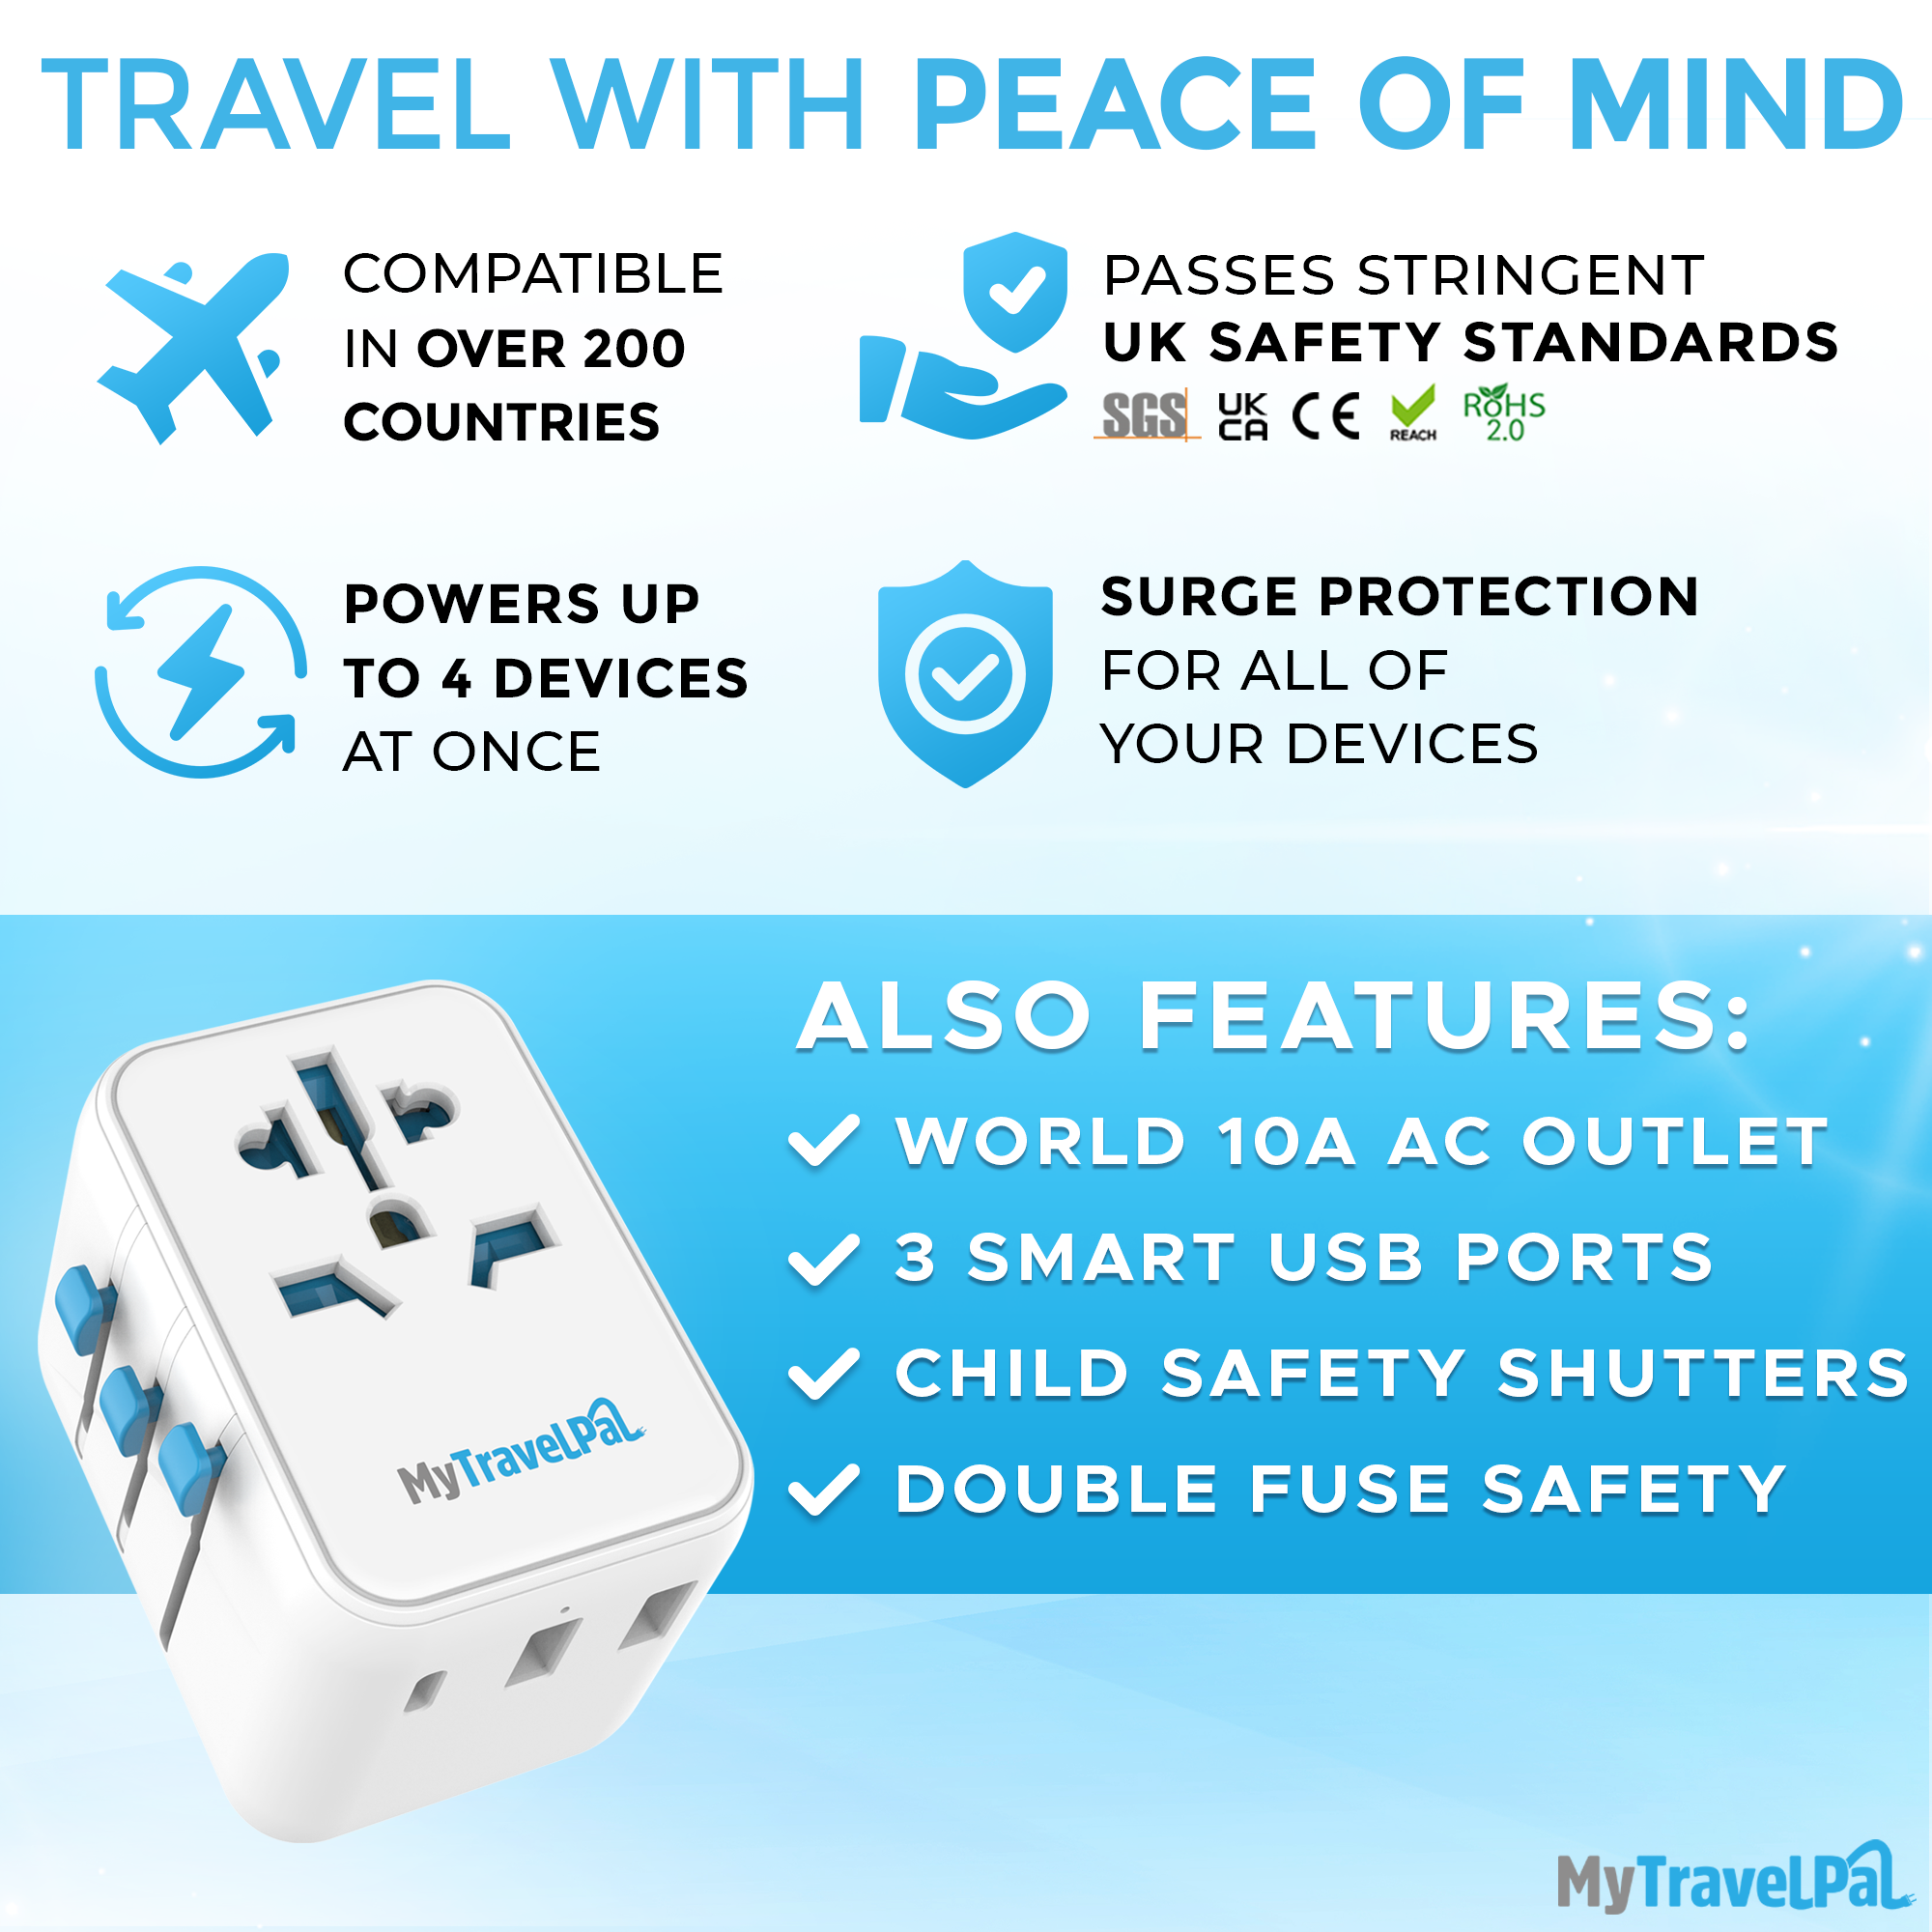 MyTravelPal® Worldwide Travel Adaptor (Ungrounded)